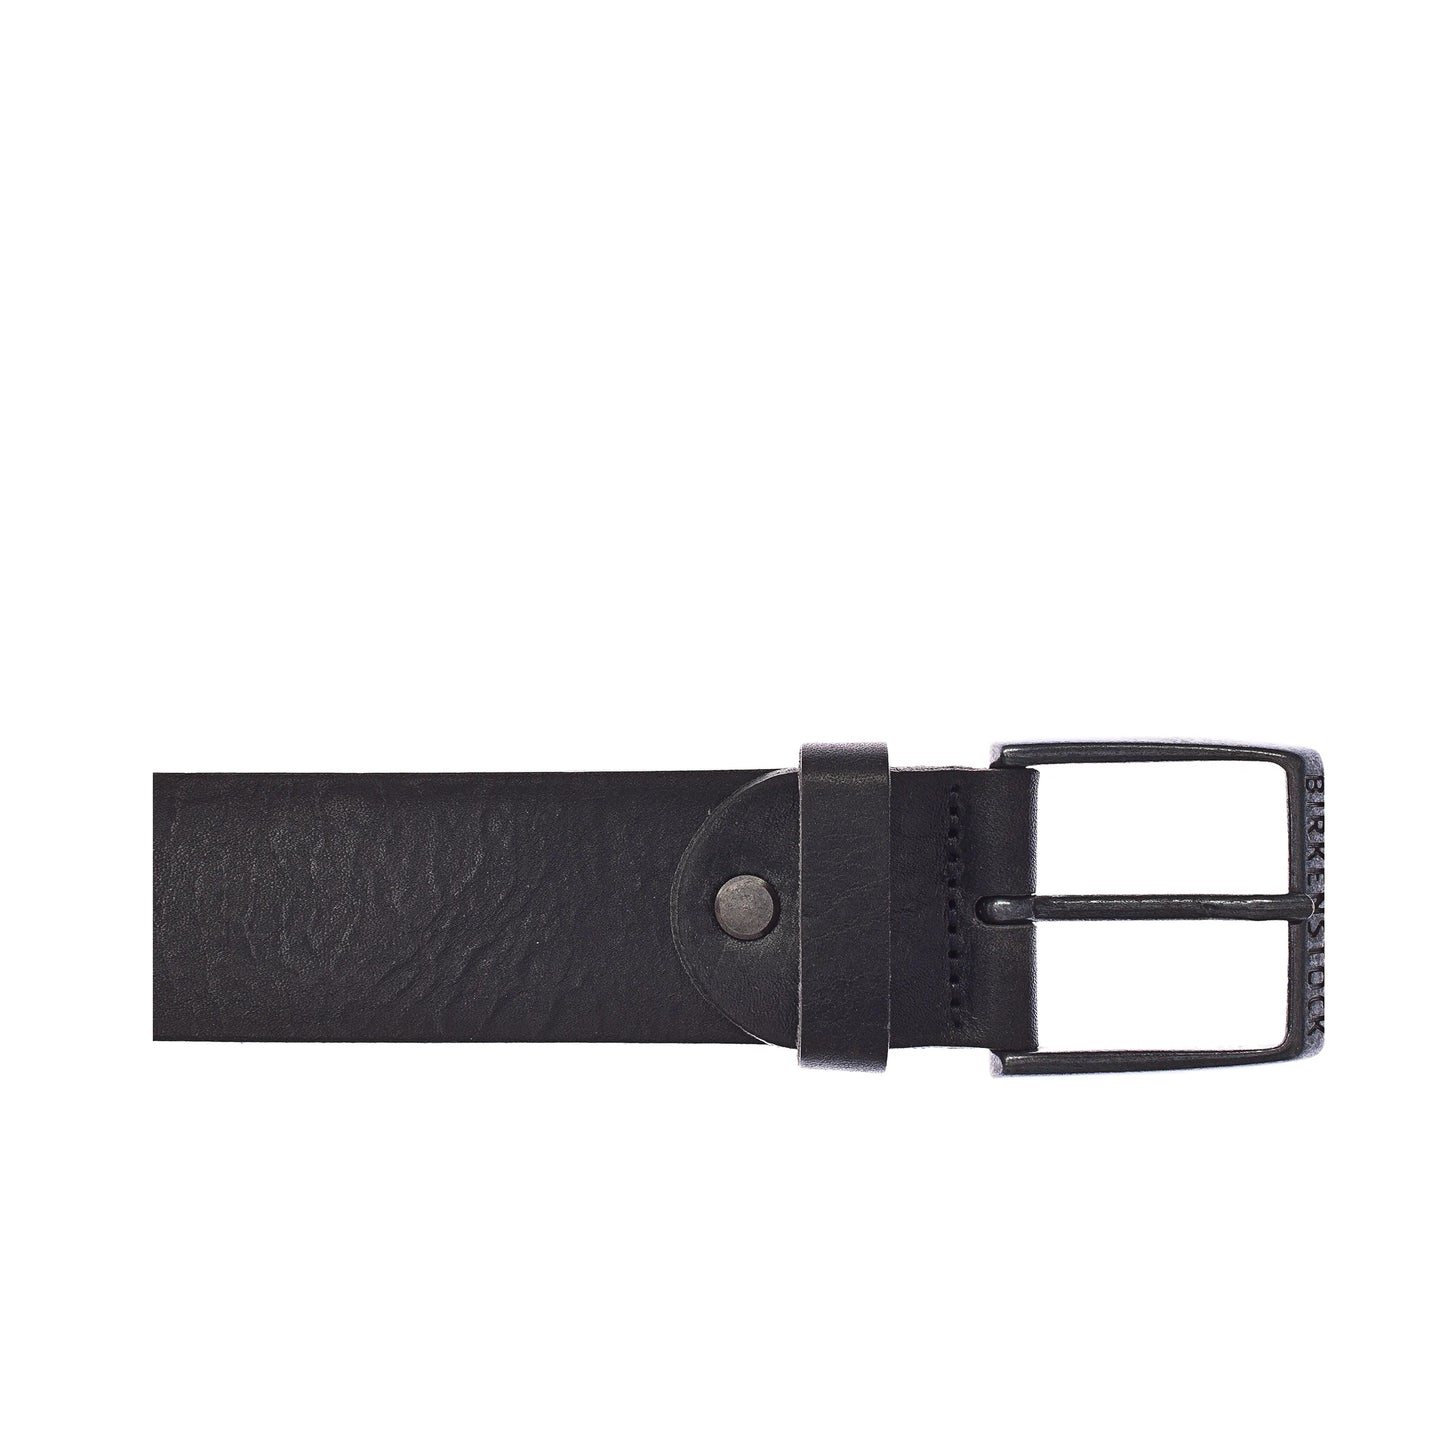 Ohio Grained Leather Belt 40mm - Black